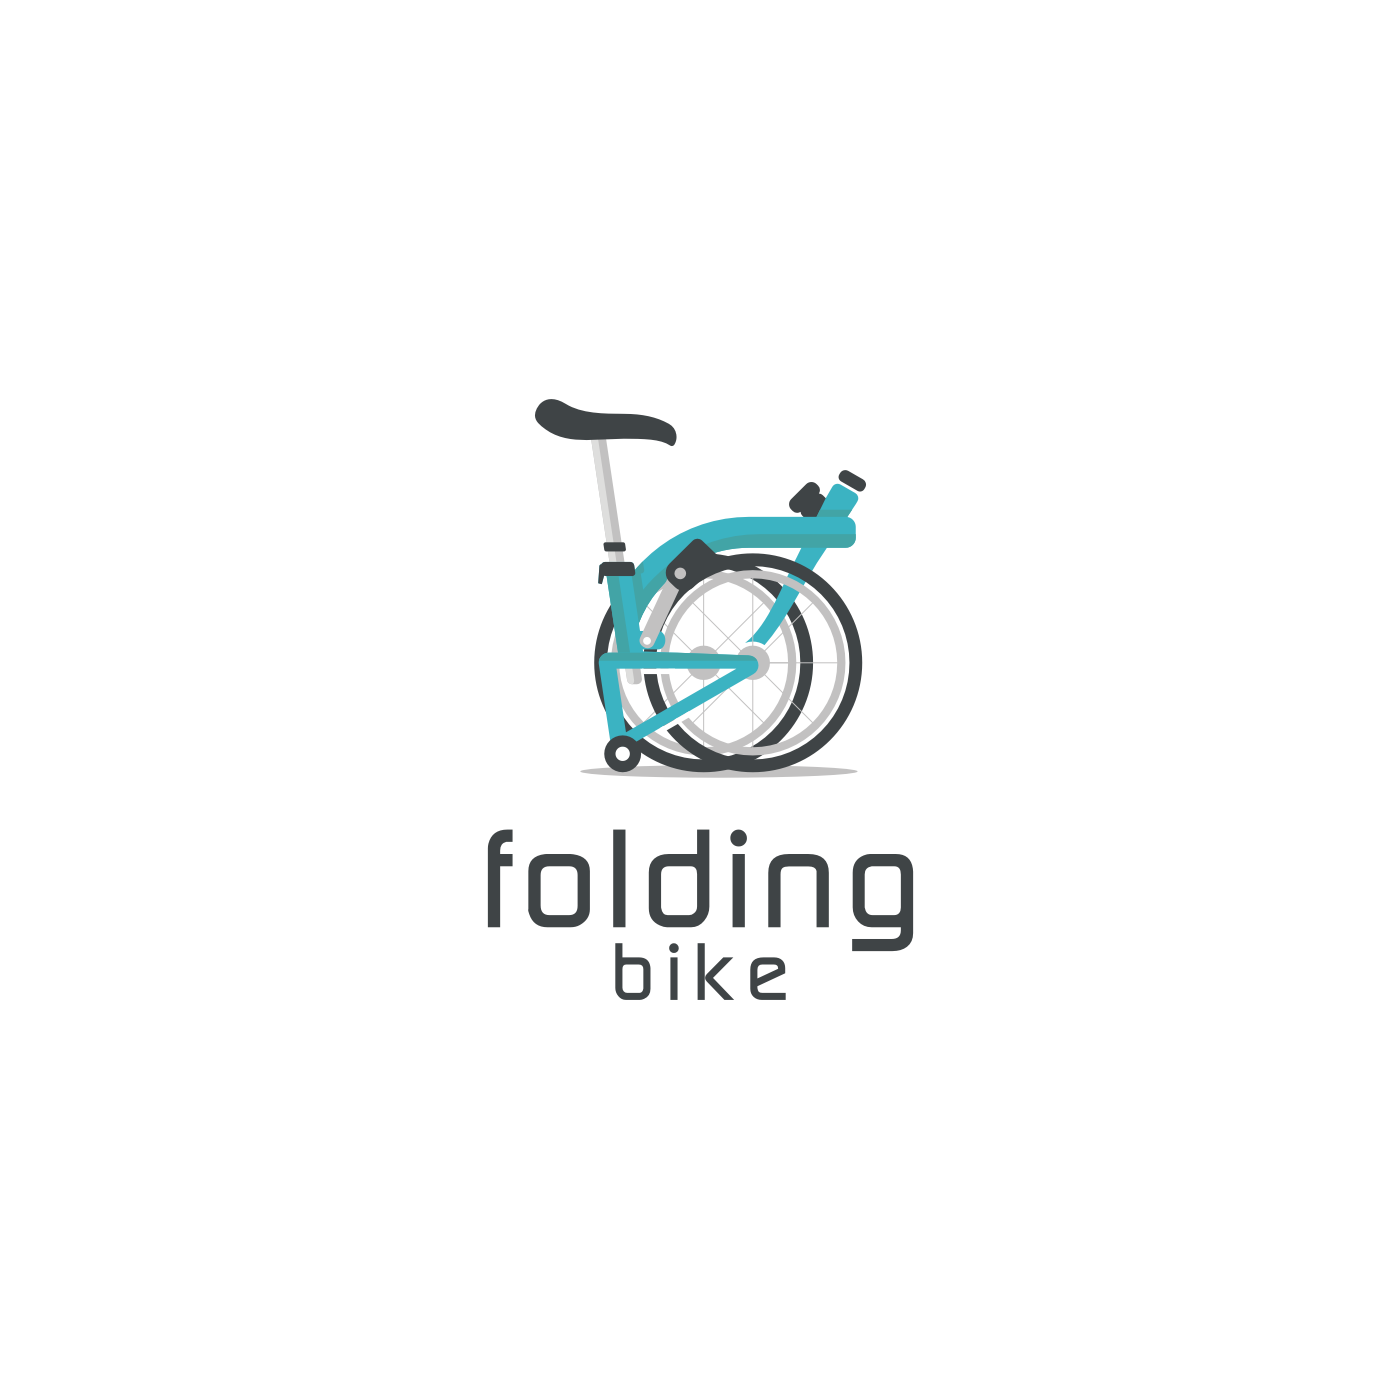 Bike folding bike logo